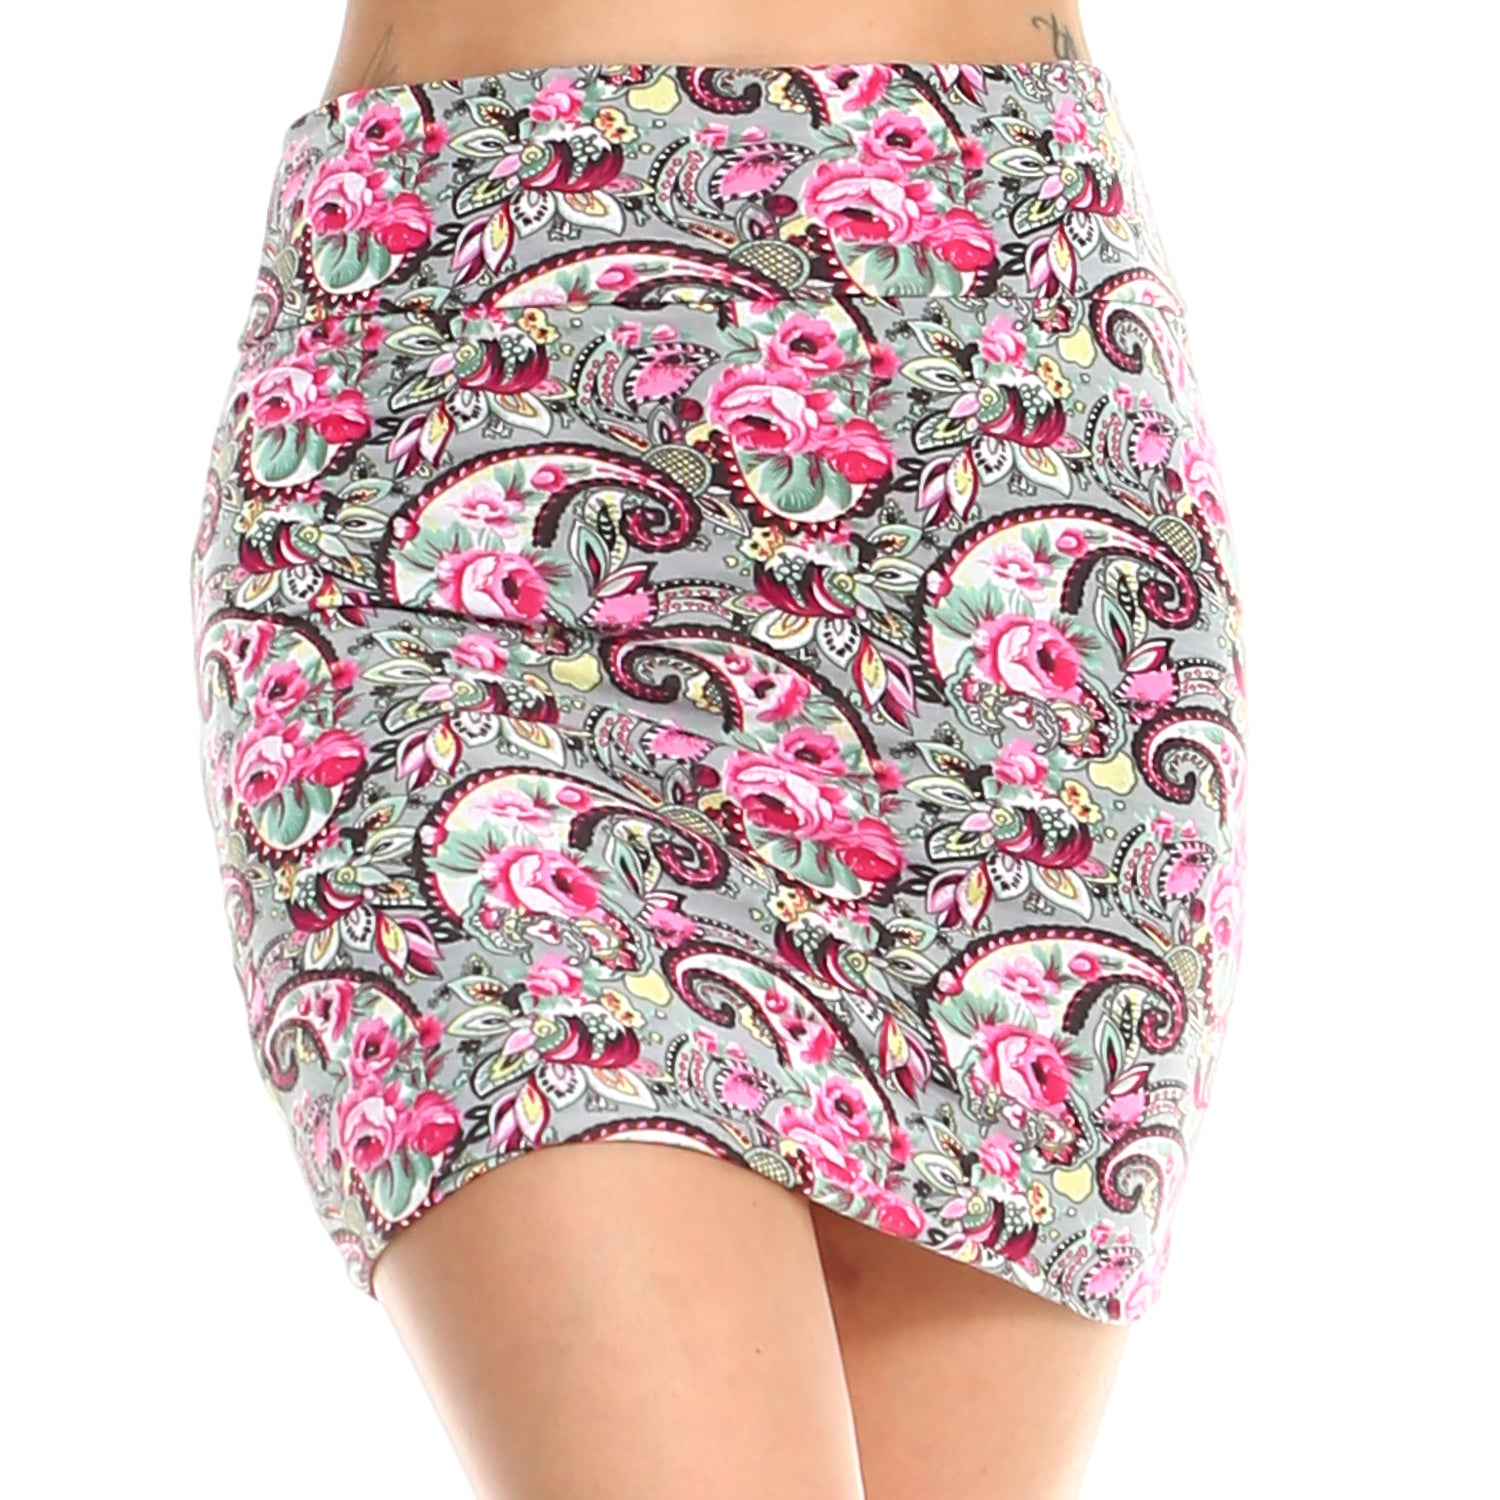 Fashionazzle Women's Casual Stretchy Bodycon Pencil Mini Skirt Print#55